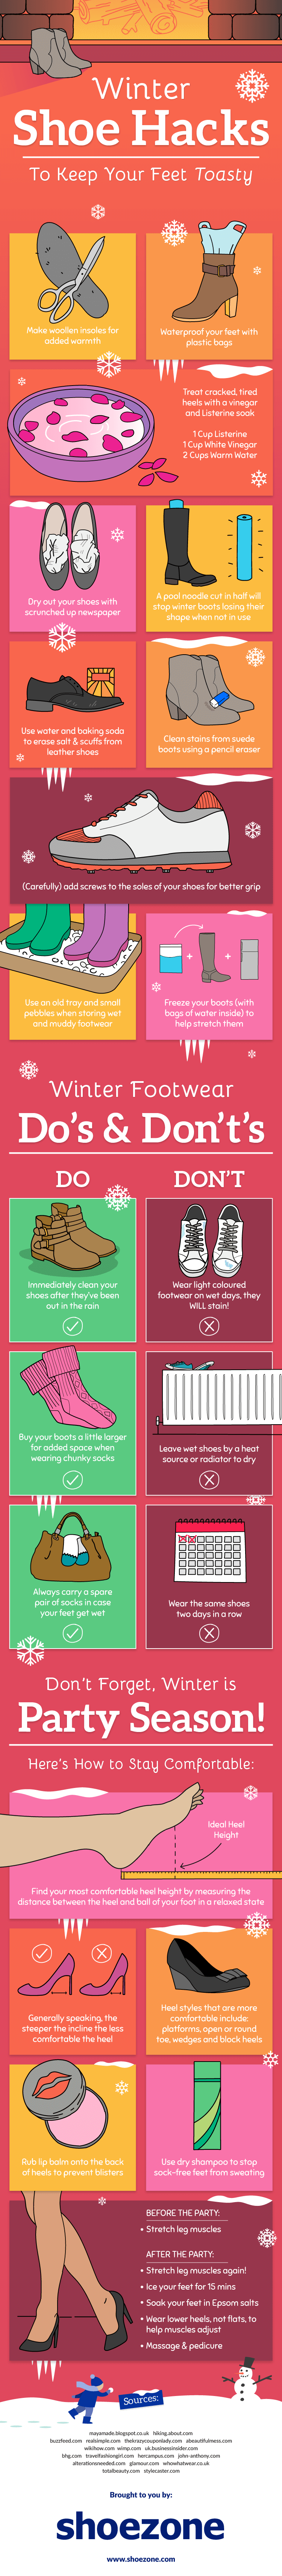 Winter Shoe Hacks to Keep Your Feet Toasty